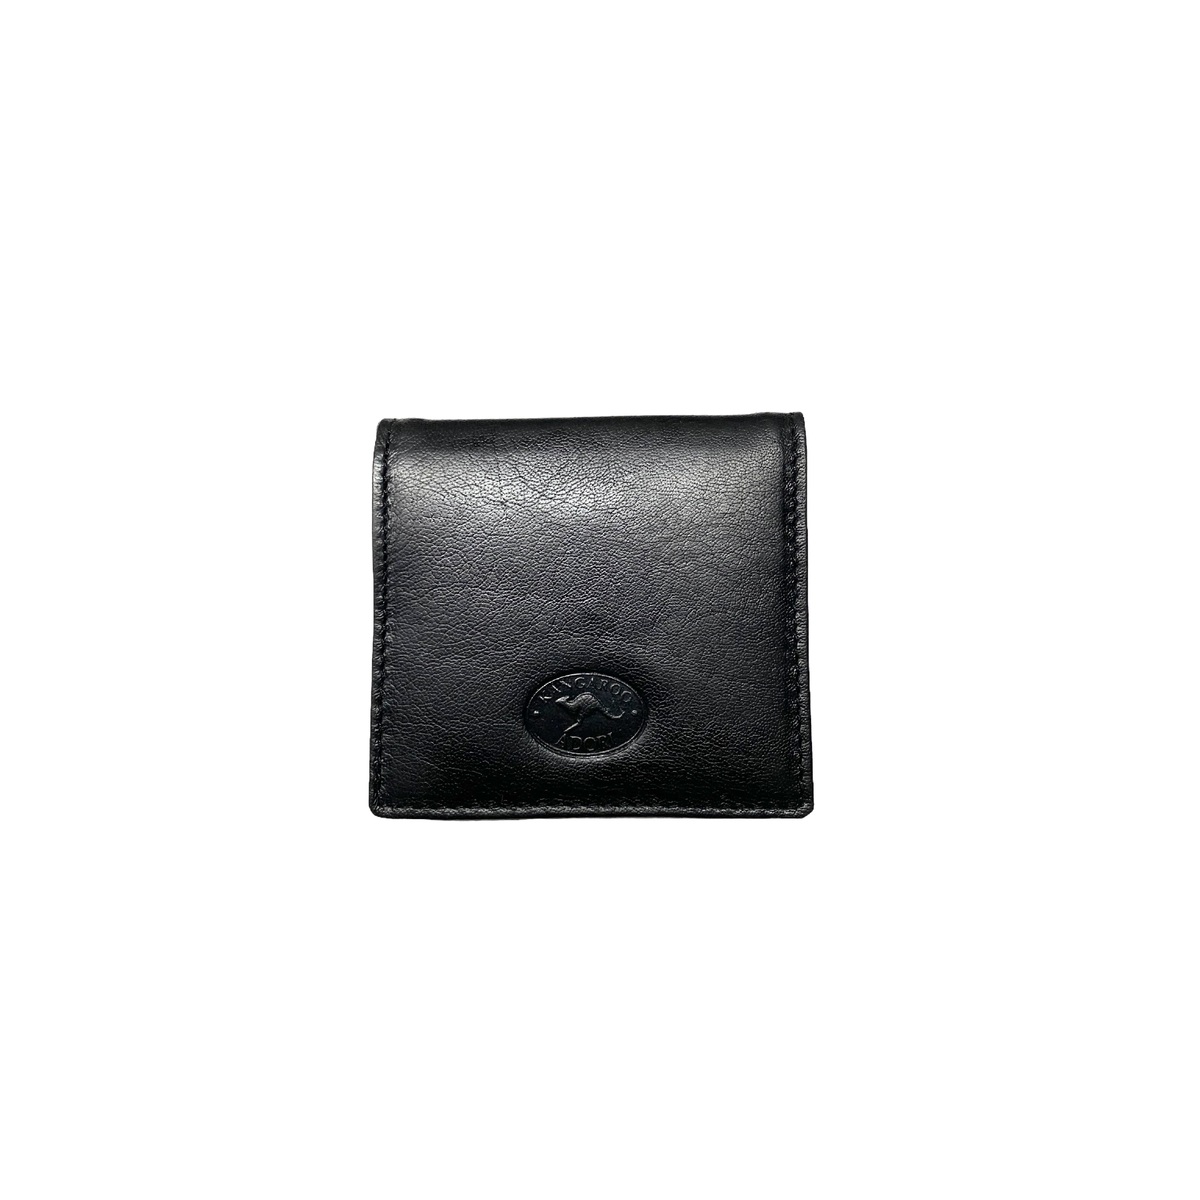 KW2101 Black Kangaroo leather